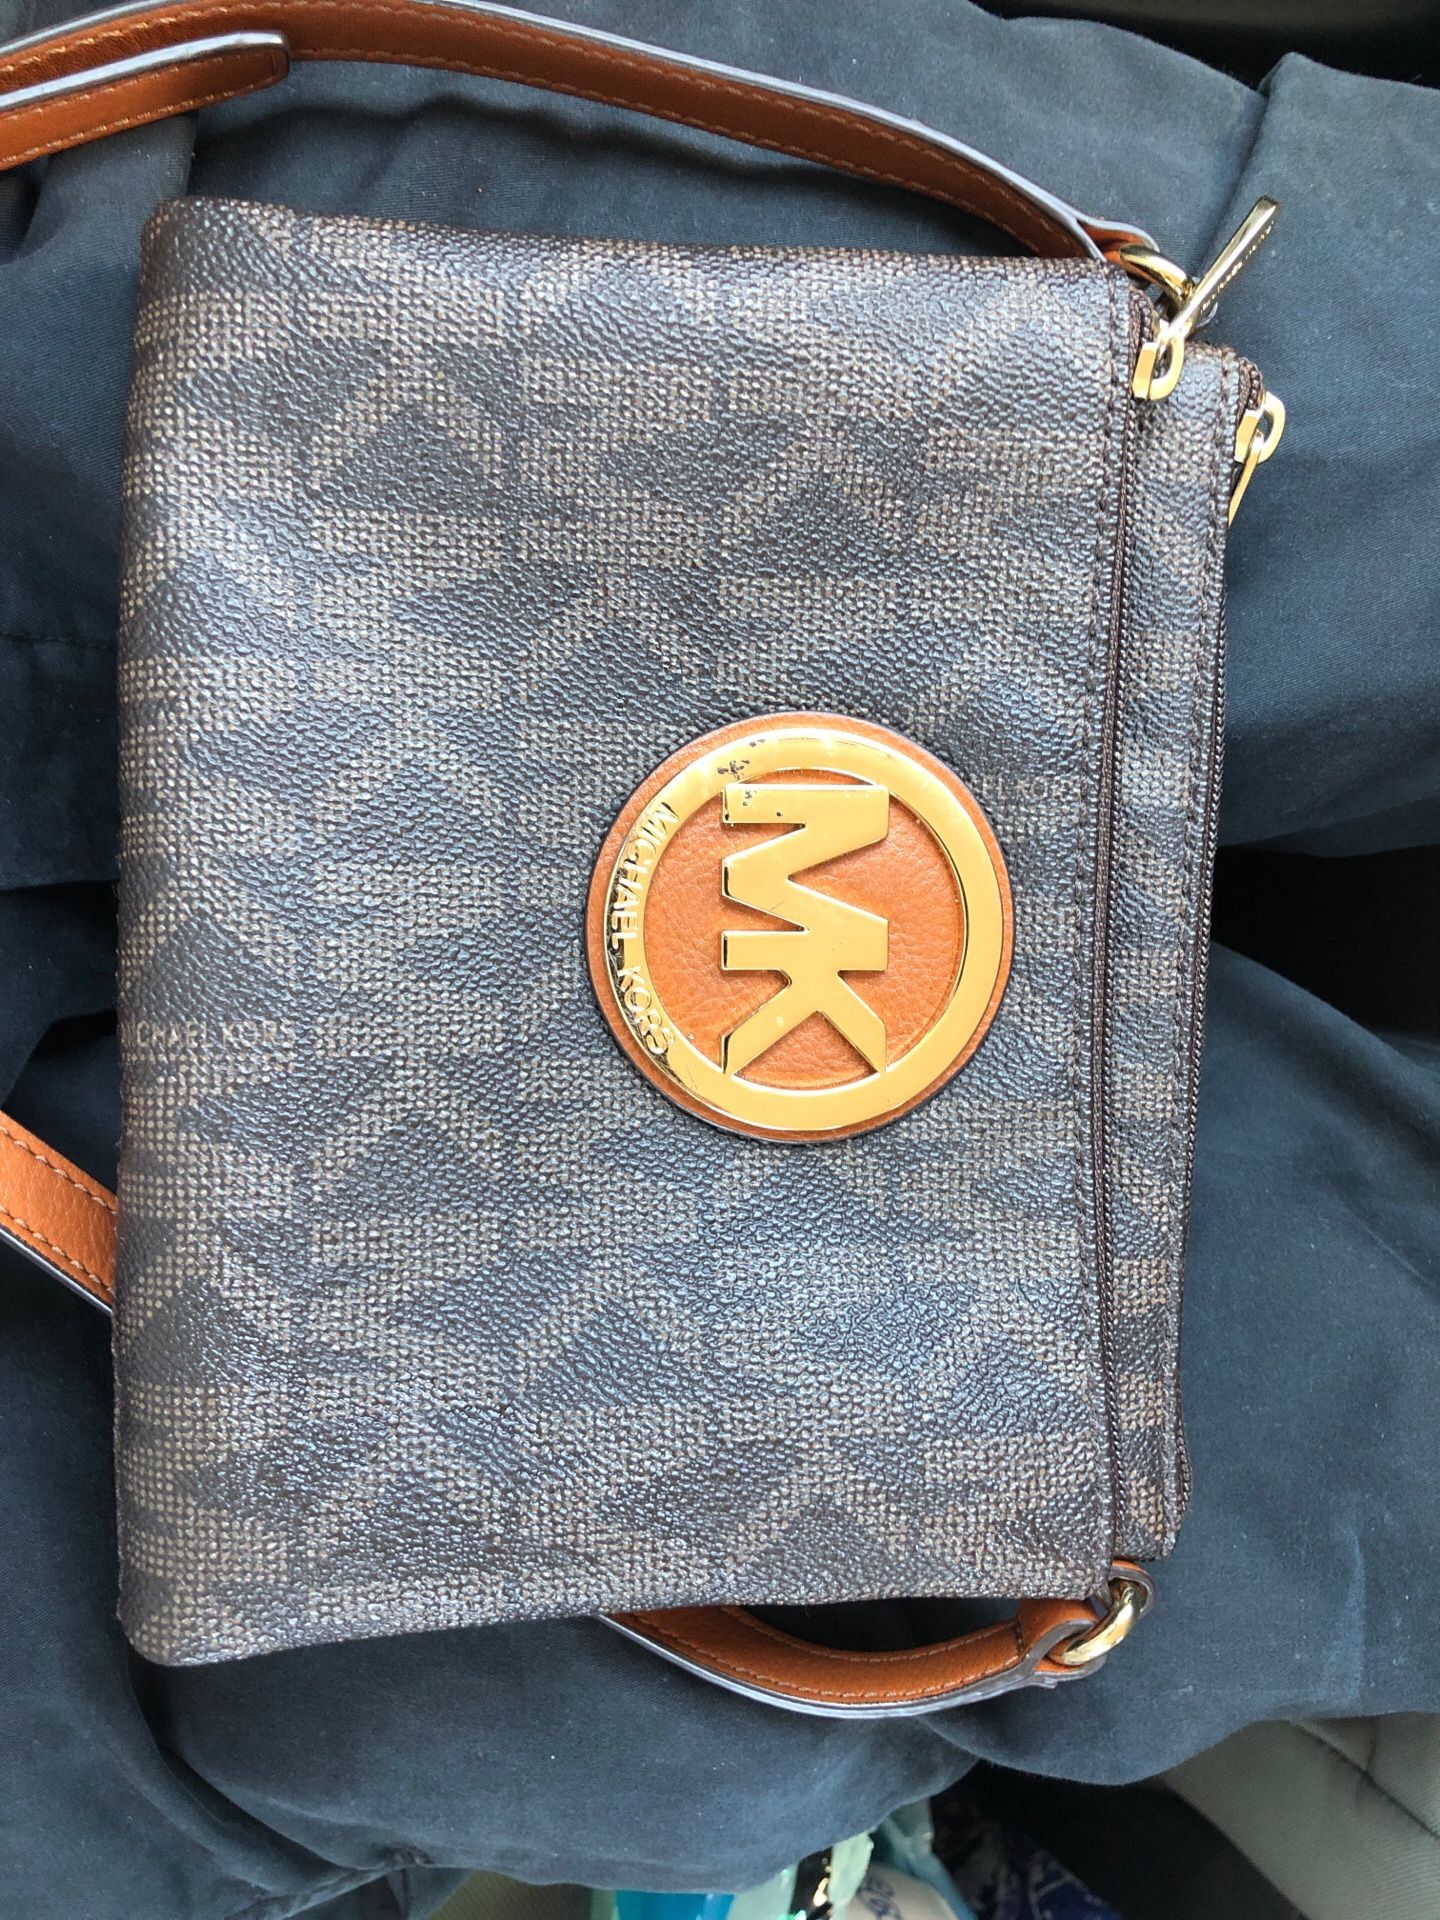 Michael Kors Women’s purse